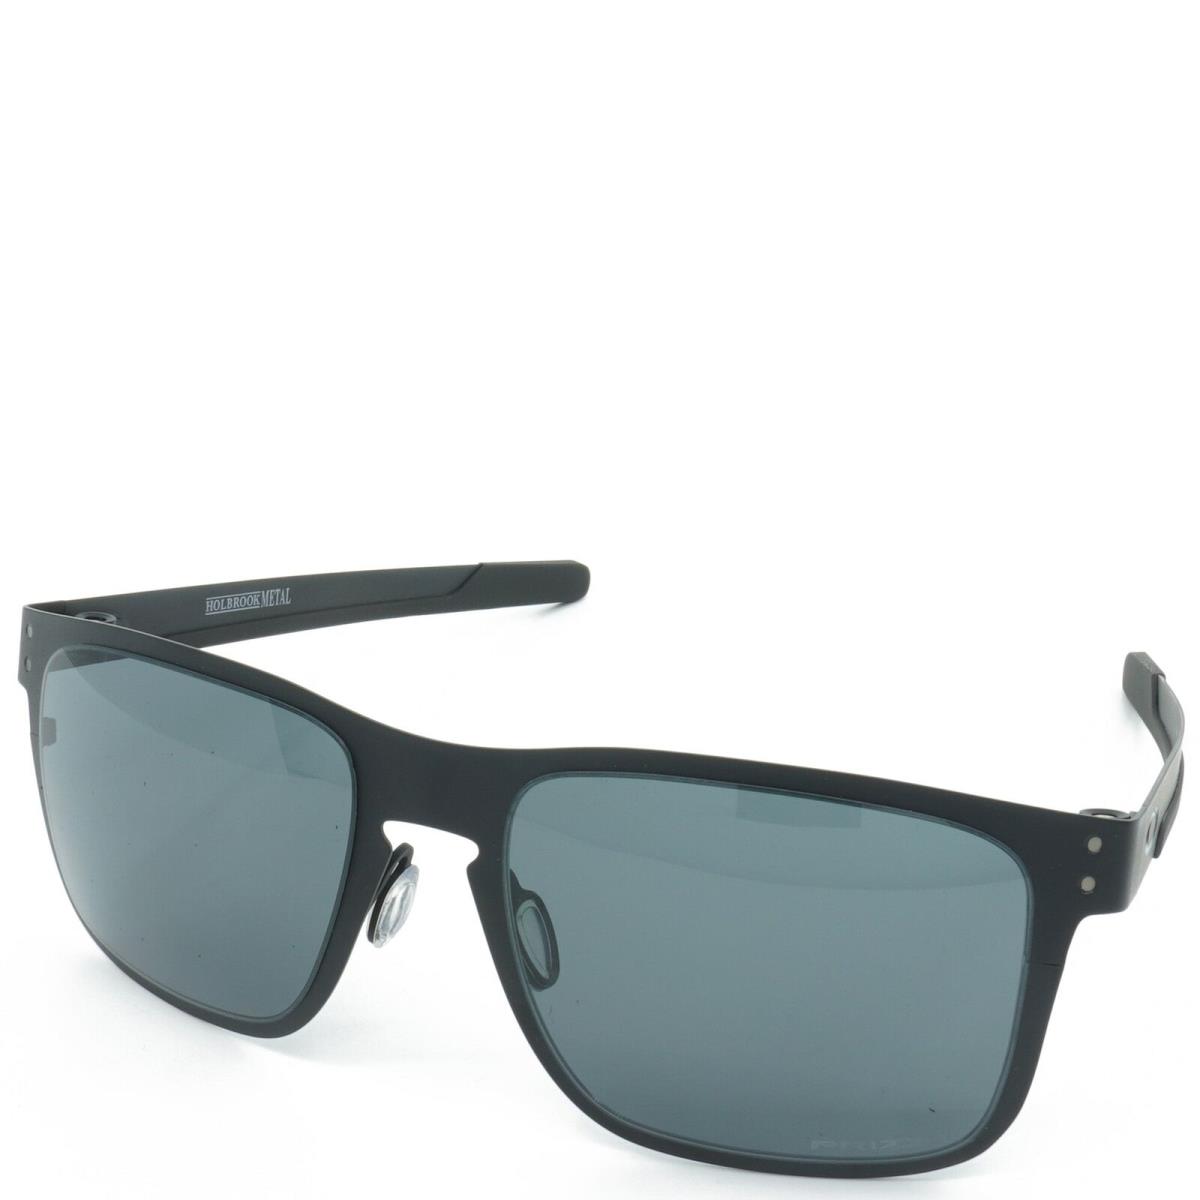 OO4123-11 Mens Oakley Holbrook Metal Sunglasses